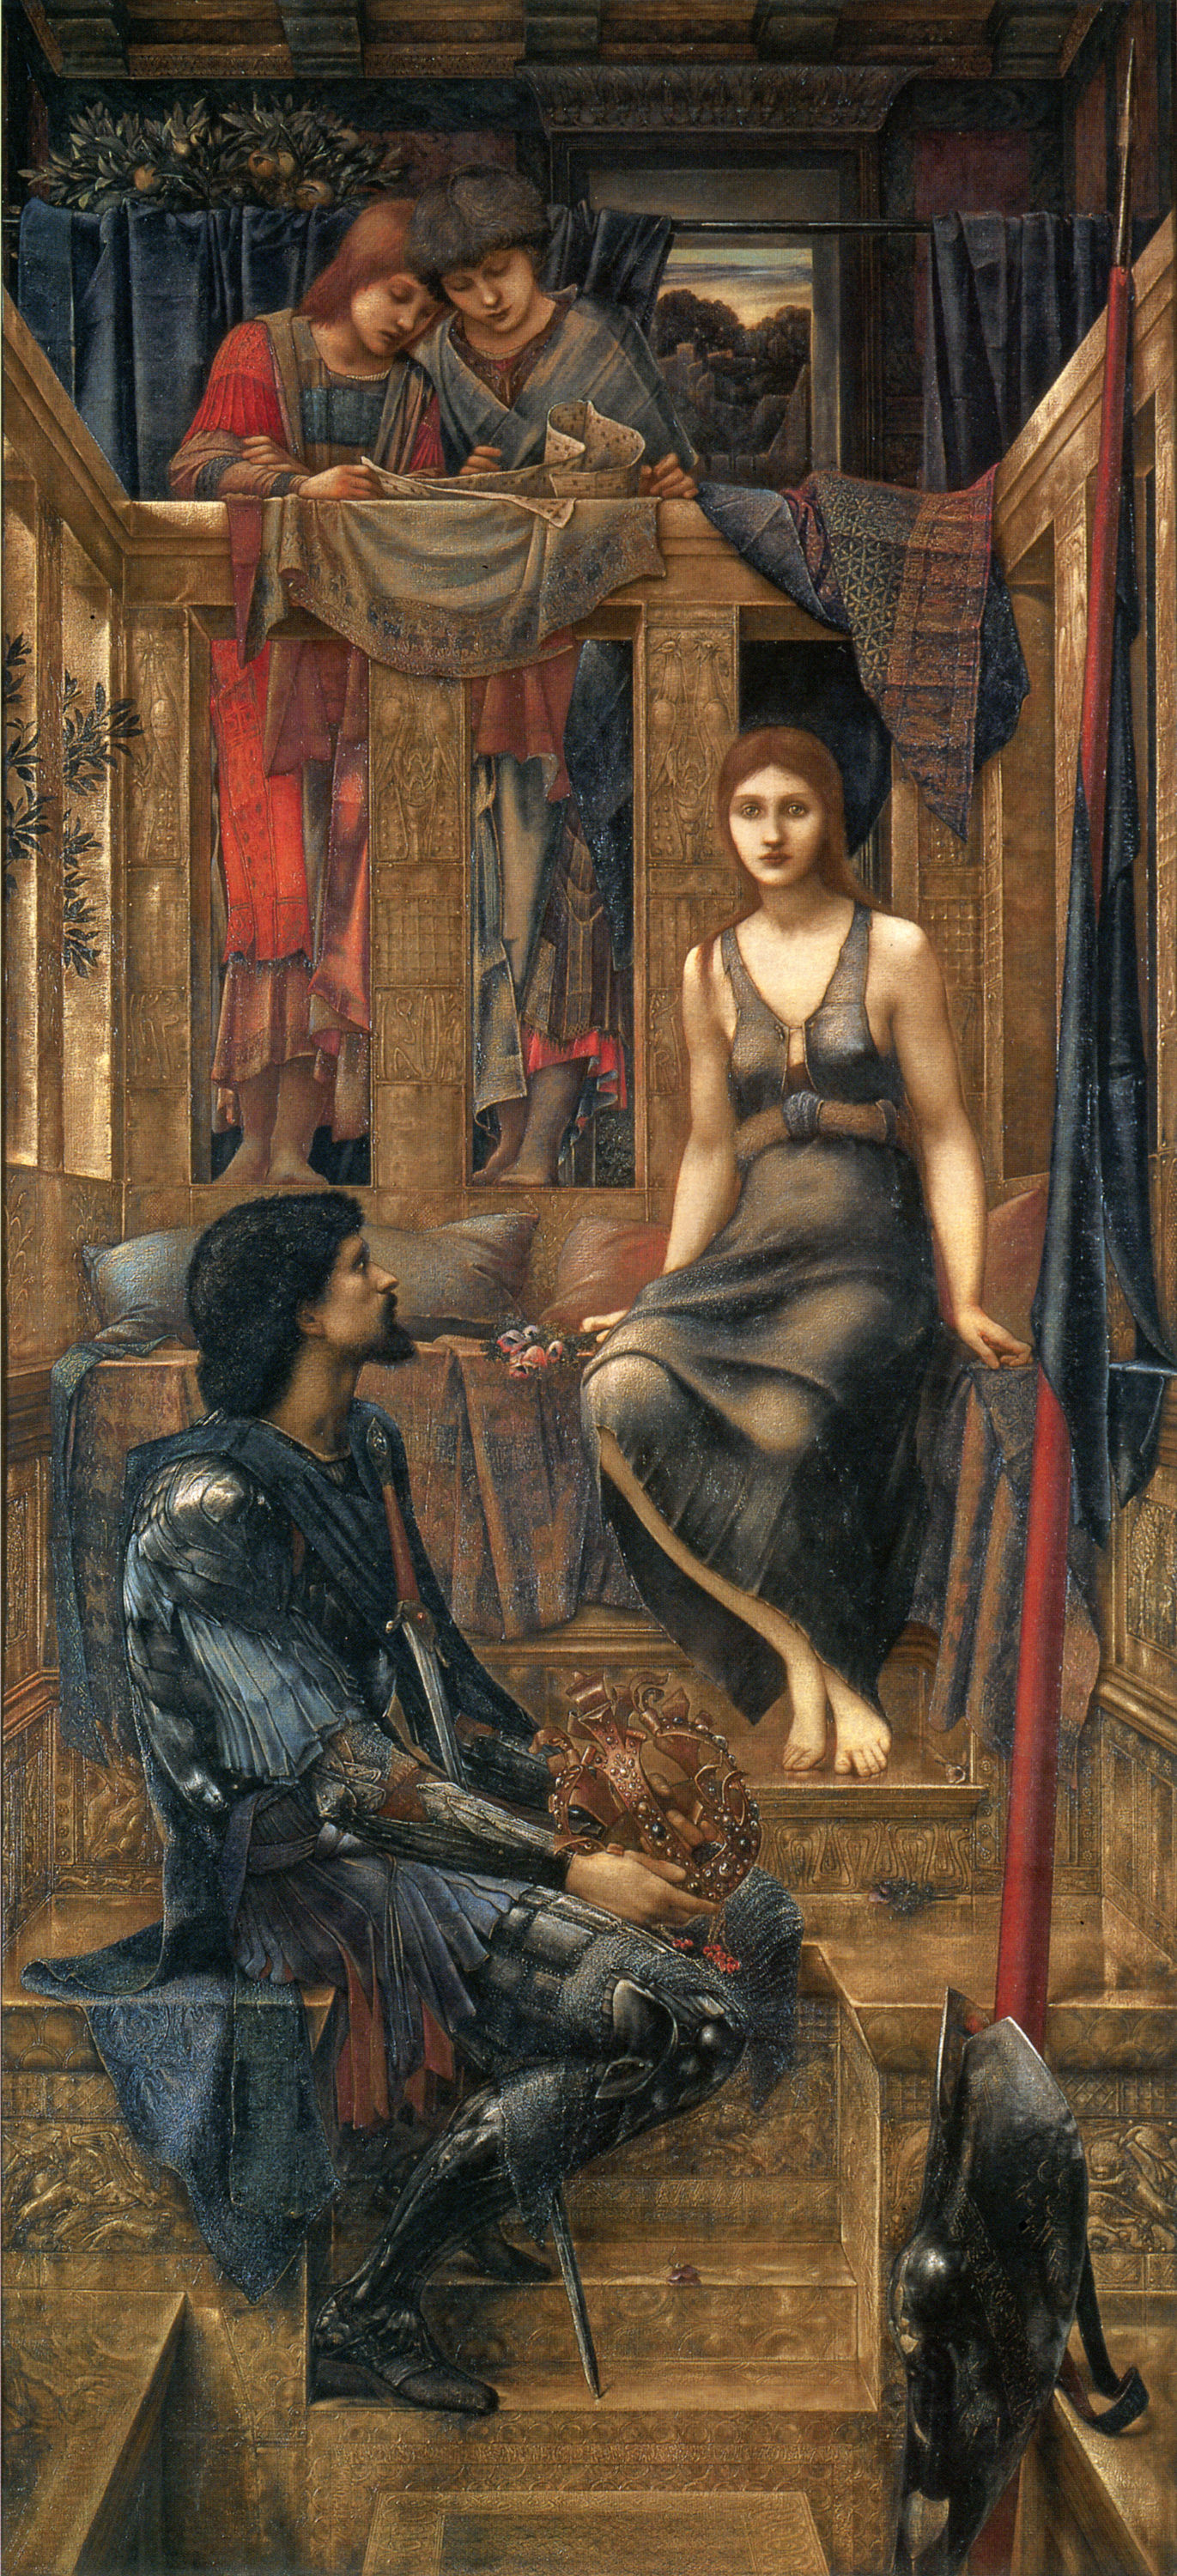 King Cophetua and the Beggar Maid by Edward Burne Jones